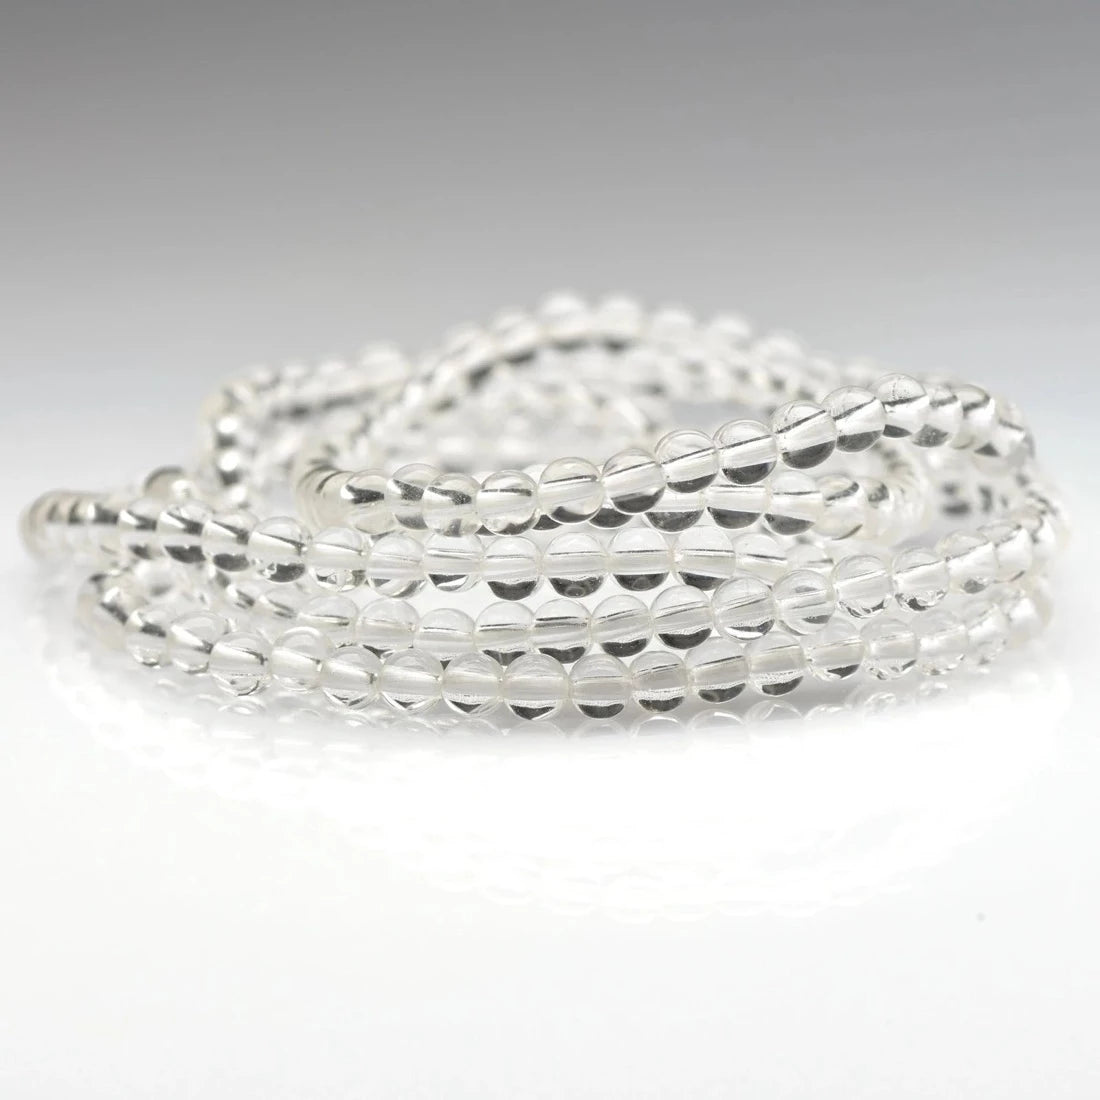 healing crystal jewelry: clear quartz crystal bracelet - small beads